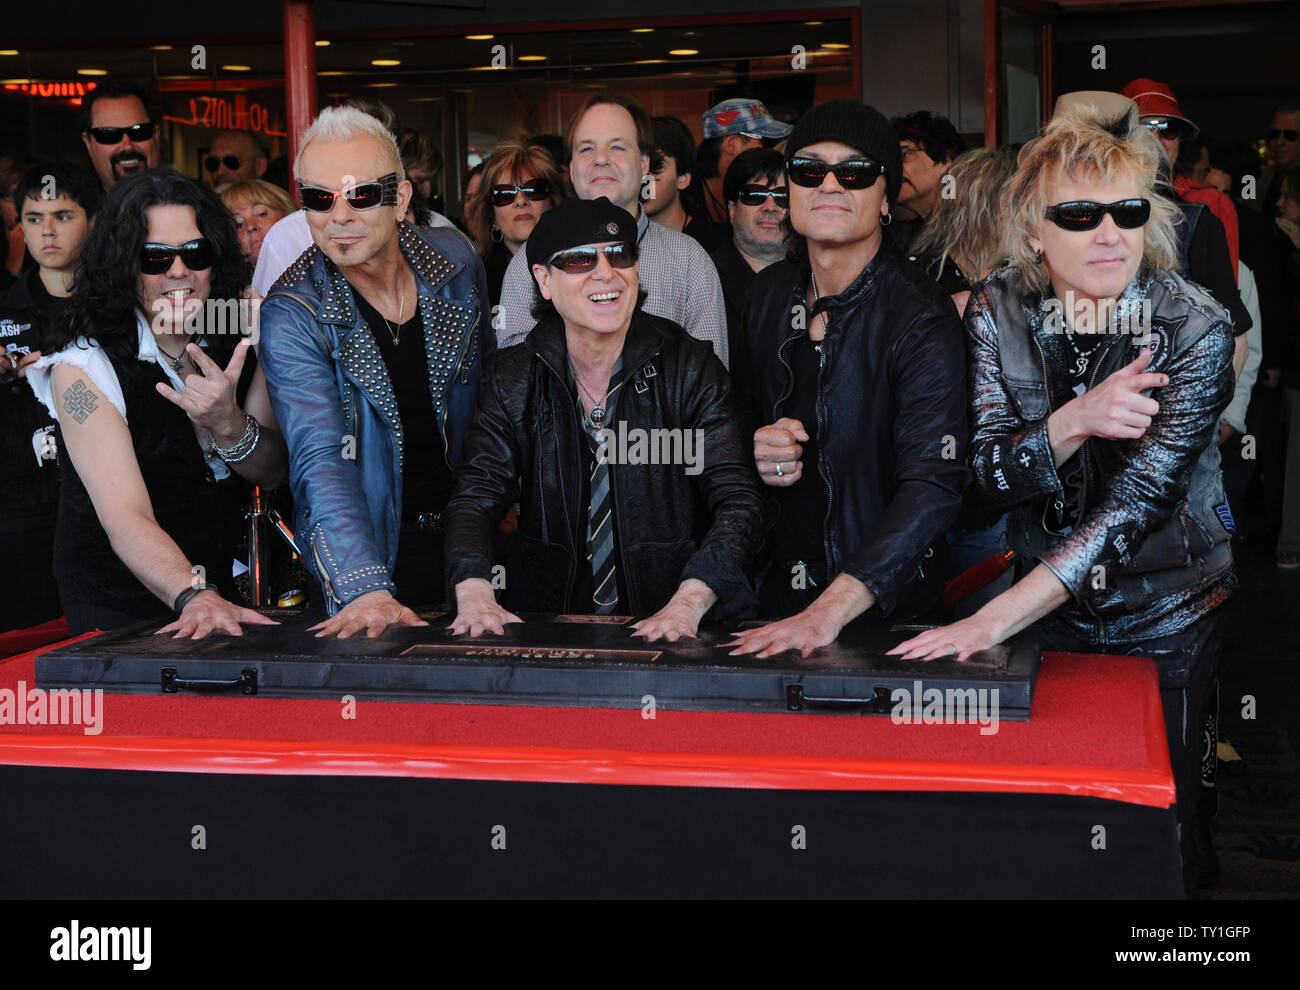 The Scorpions Pawel Maciwoda, Rudolf Schenker, Klaus Meine, Matthias Jabs, James Kottak (L-R), are inducted on Hollywood's RockWalk on April 6, 2010 in Los Angeles, California.    UPI/Jim Ruymen Stock Photo